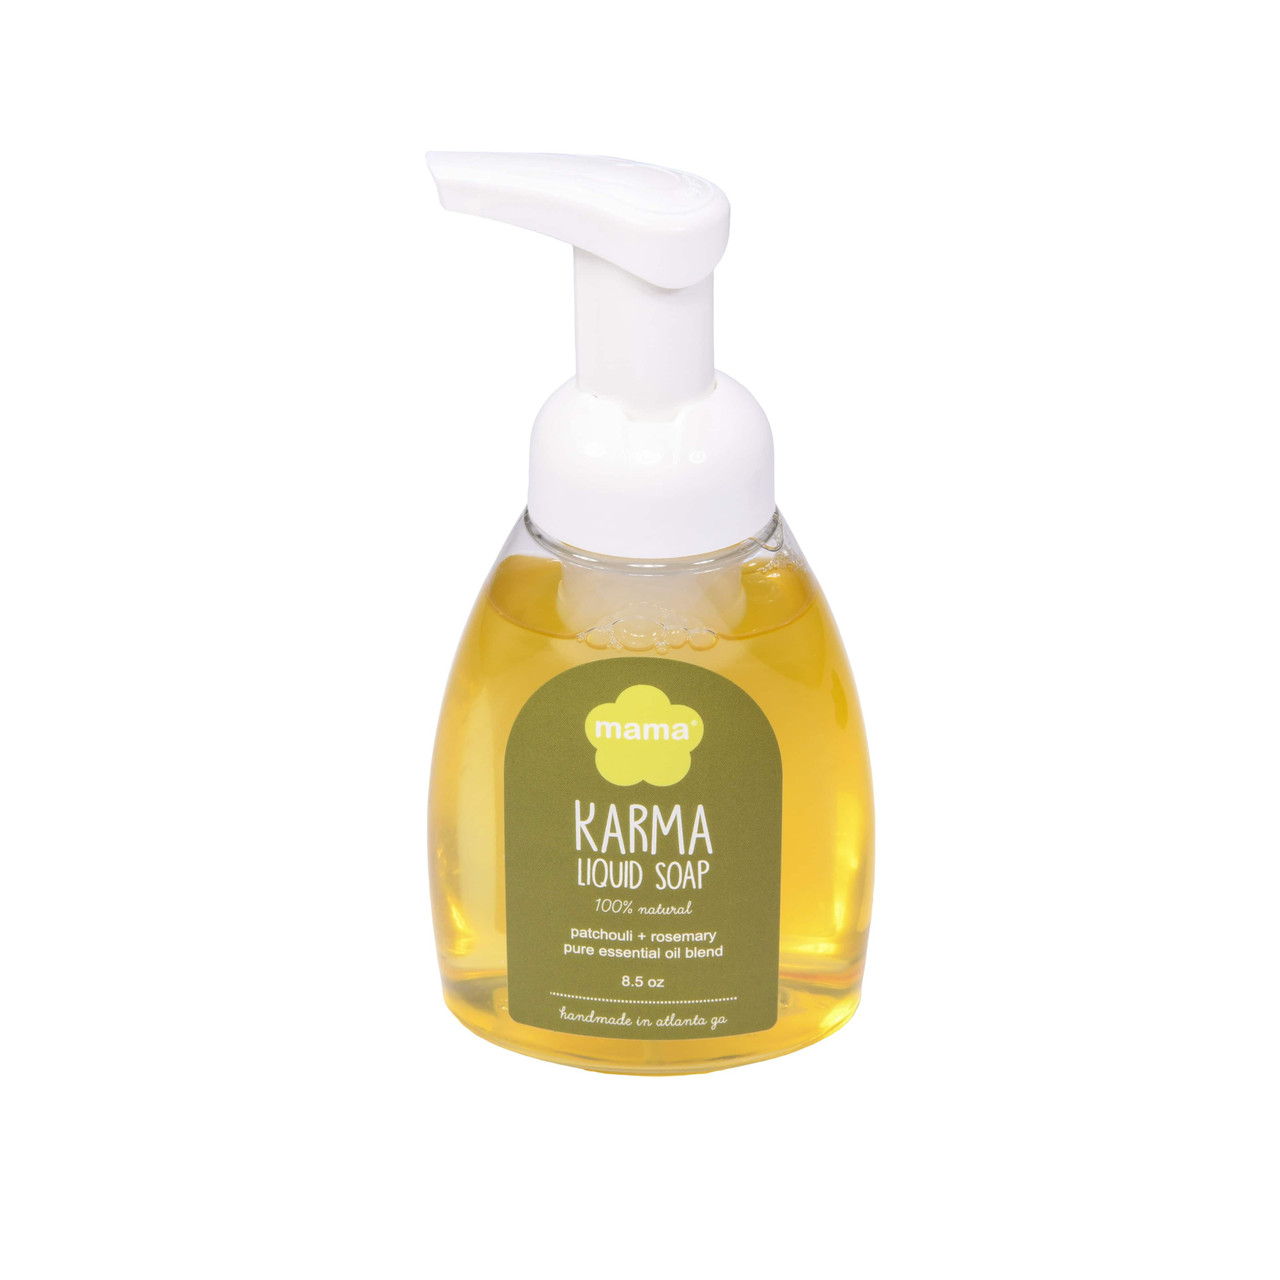 Karma (Patchouli + Rosemary) Liquid Soap | Mama Bath + Body